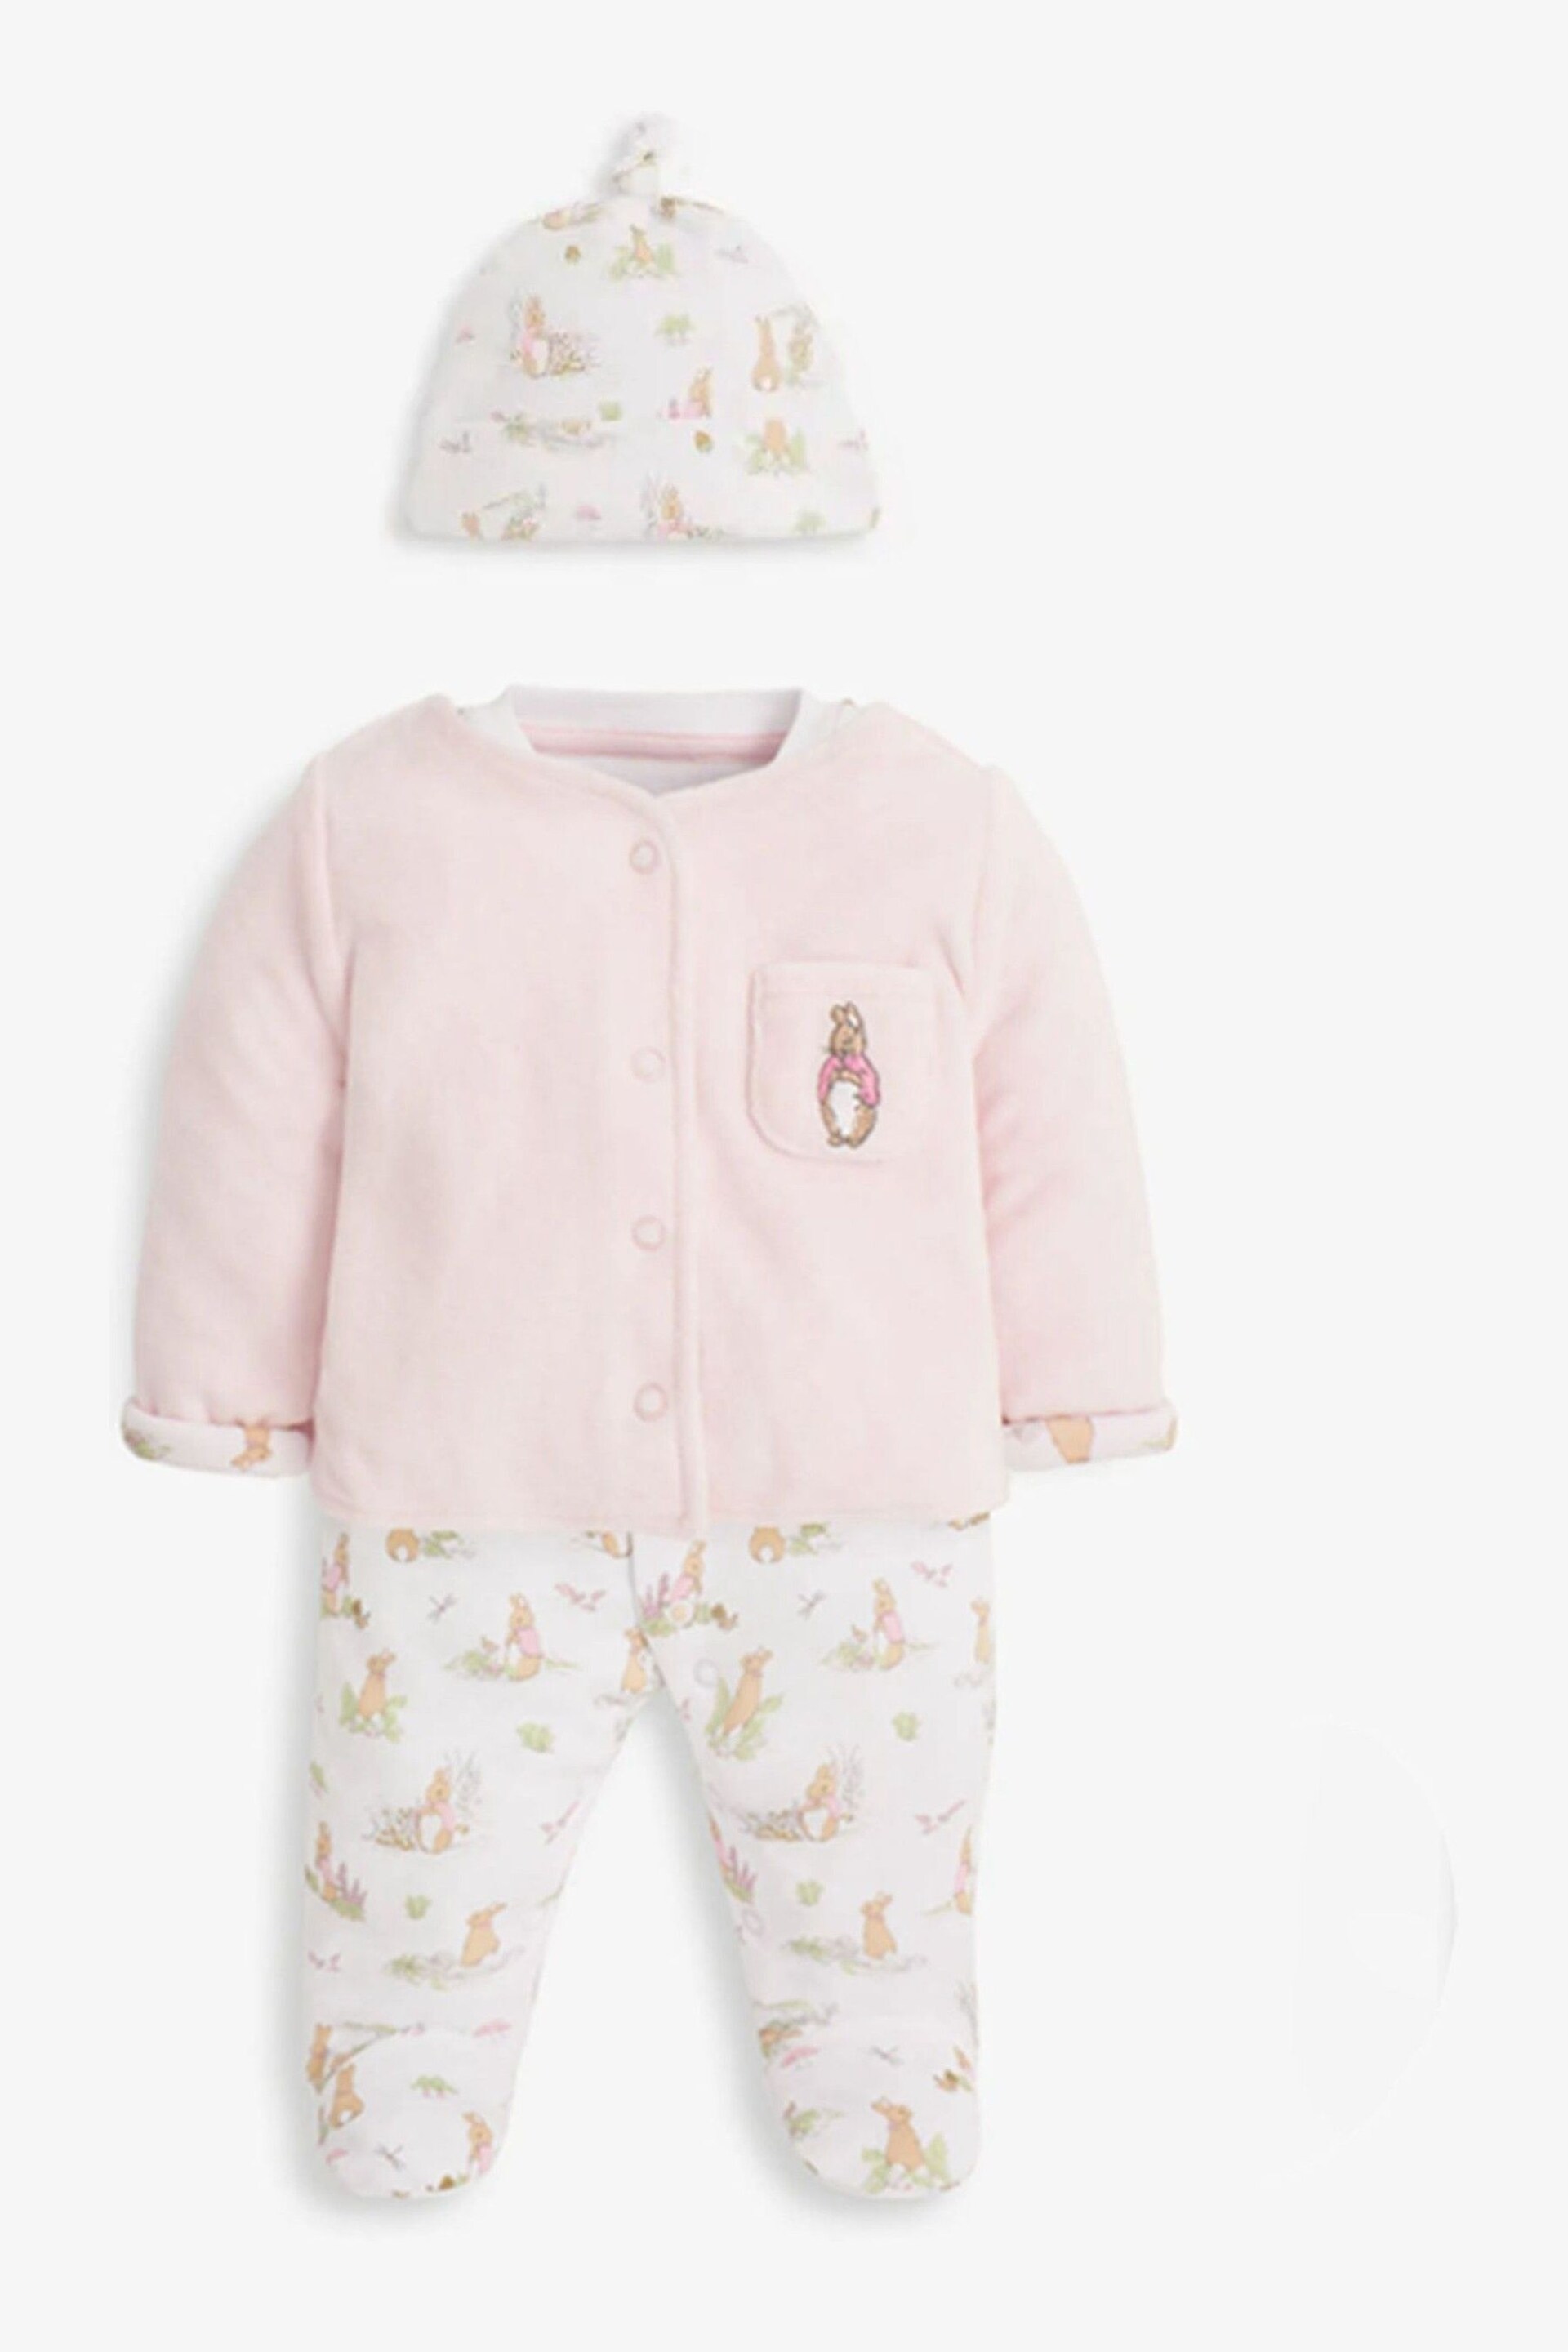 JoJo Maman Bébé Pink 3-Piece Flopsy Bunny Sleepsuit, Jacket & Hat Set - Image 3 of 9